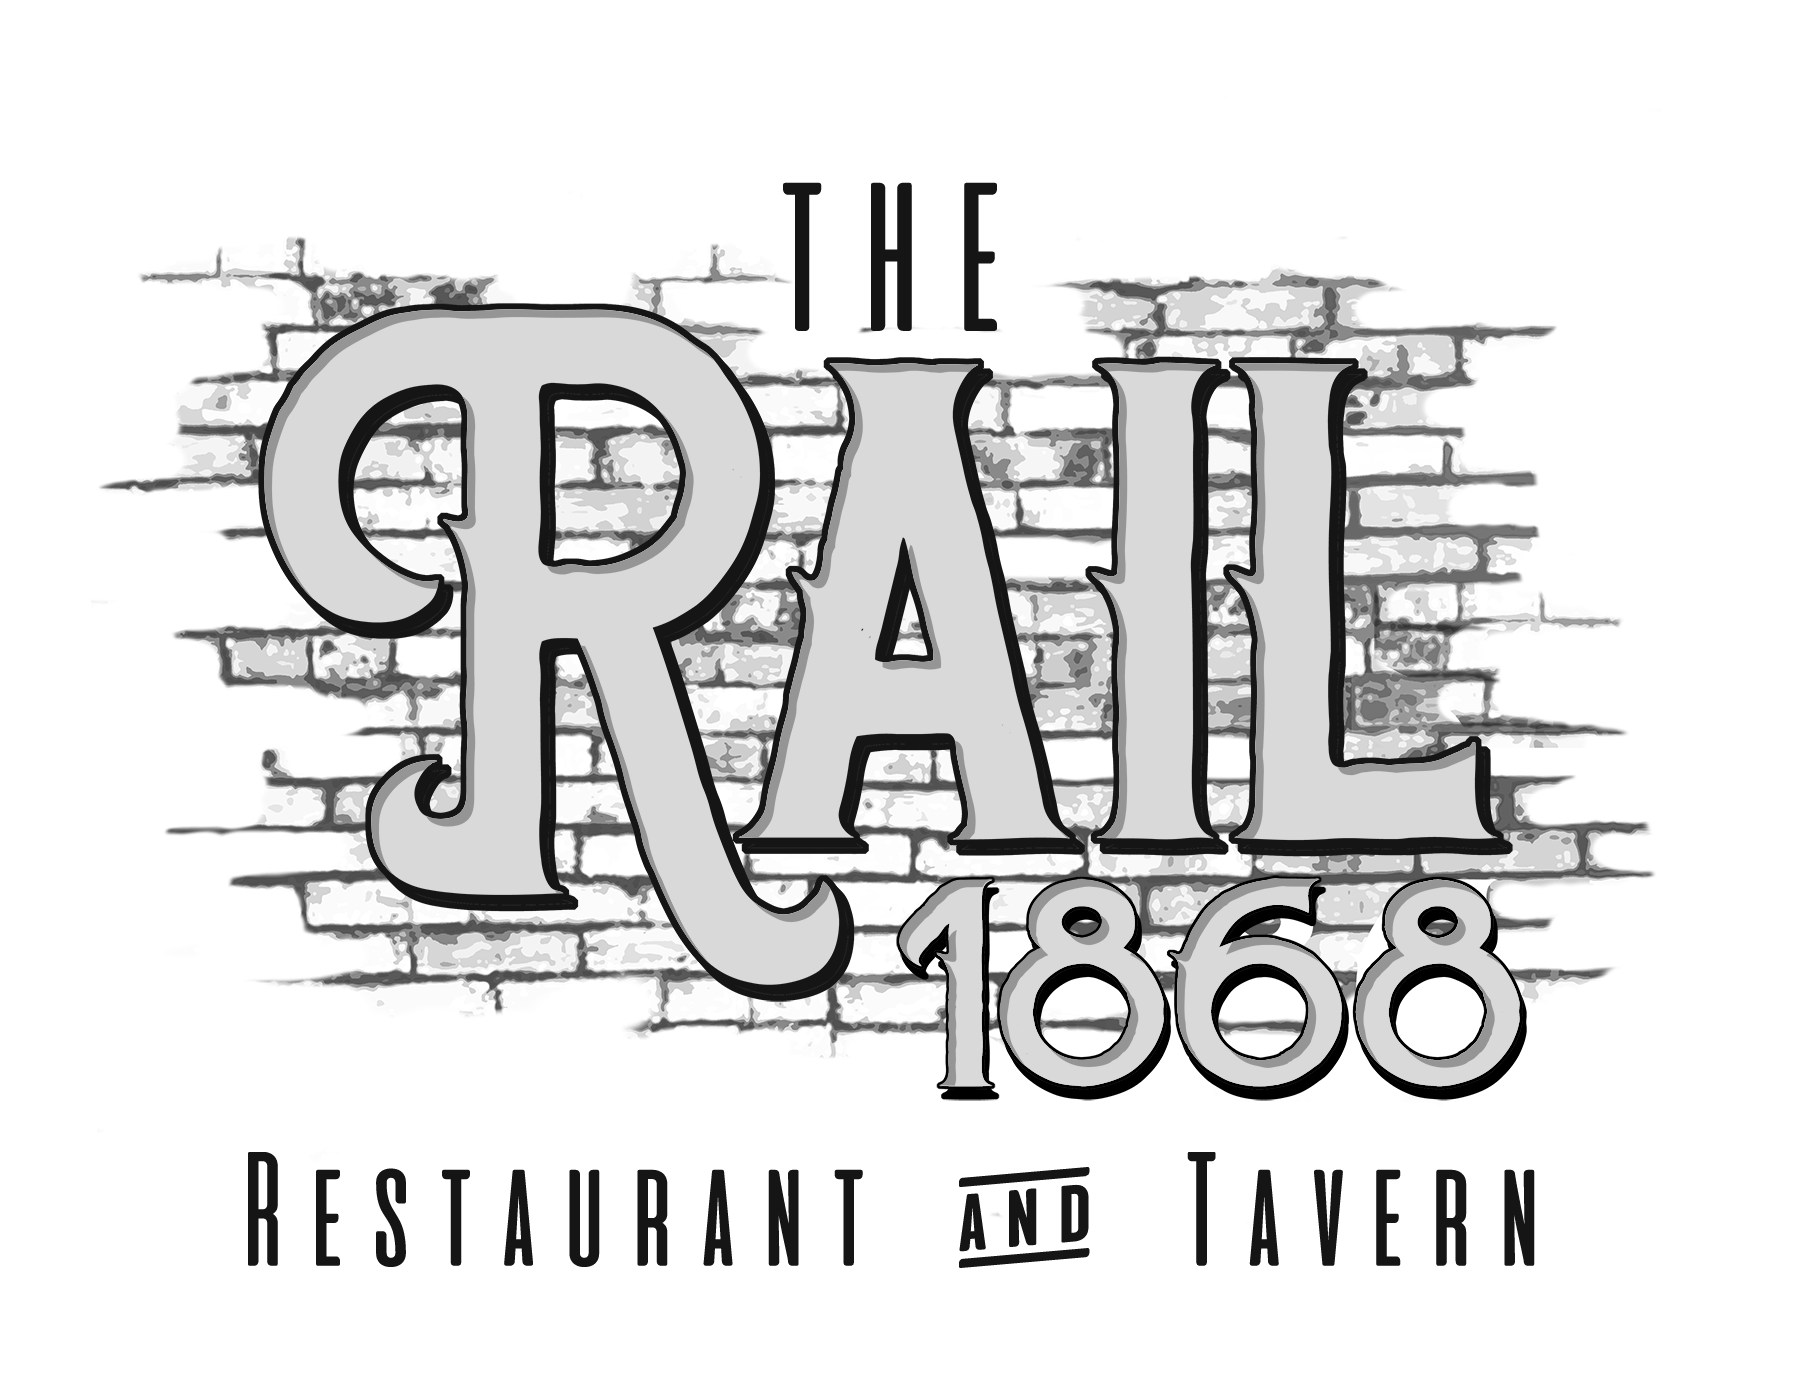 The Rail 1868 Restaurant and Tavern